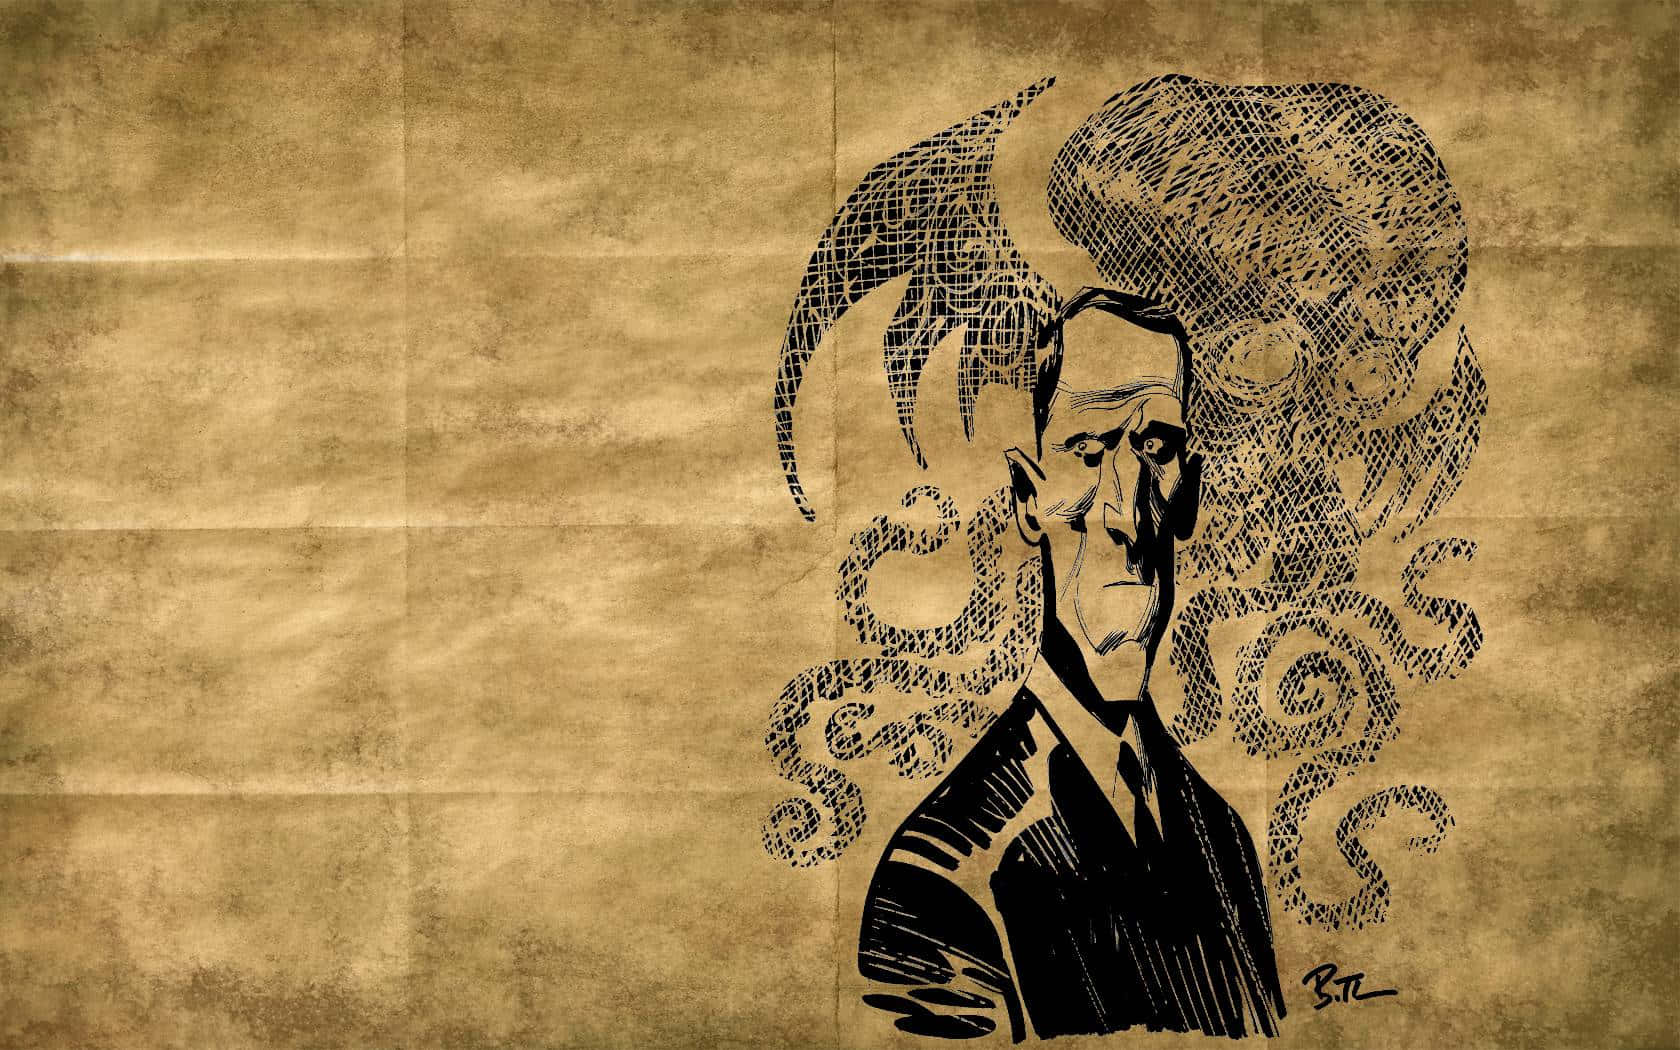 Explore the nightmarish world of the horror author H.P. Lovecraft